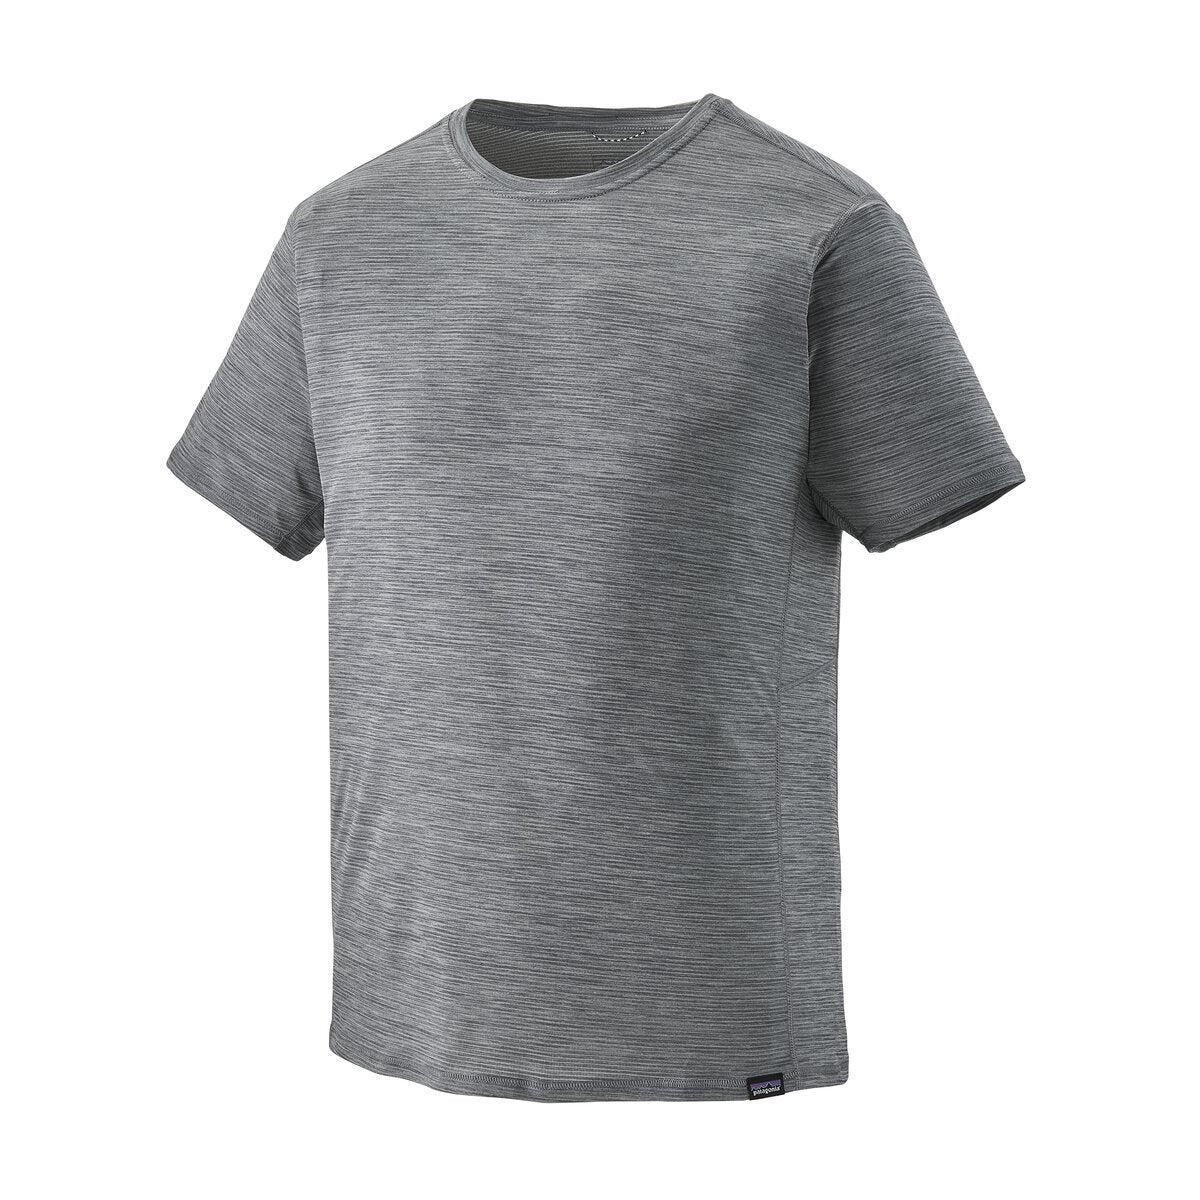 Patagonia, Capilene® Cool Lightweight Shirt, Men's, Forge Grey